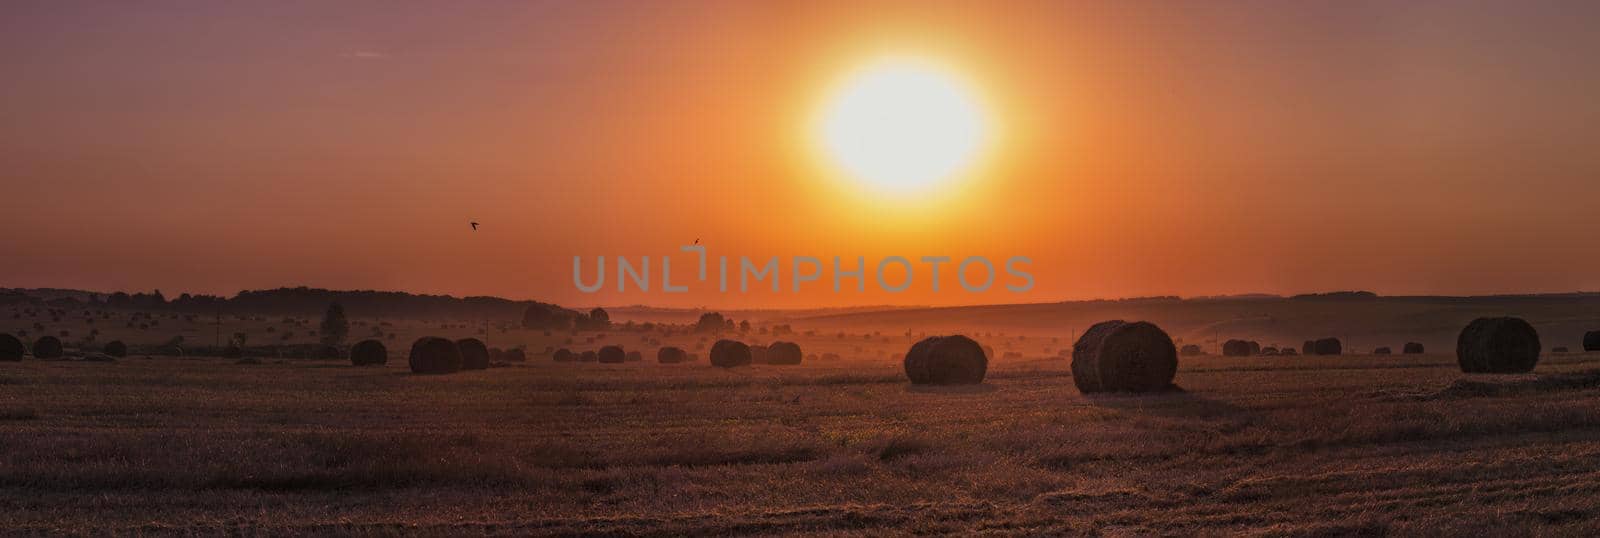 rick field in golden sunset light atmosferic panoramic shot